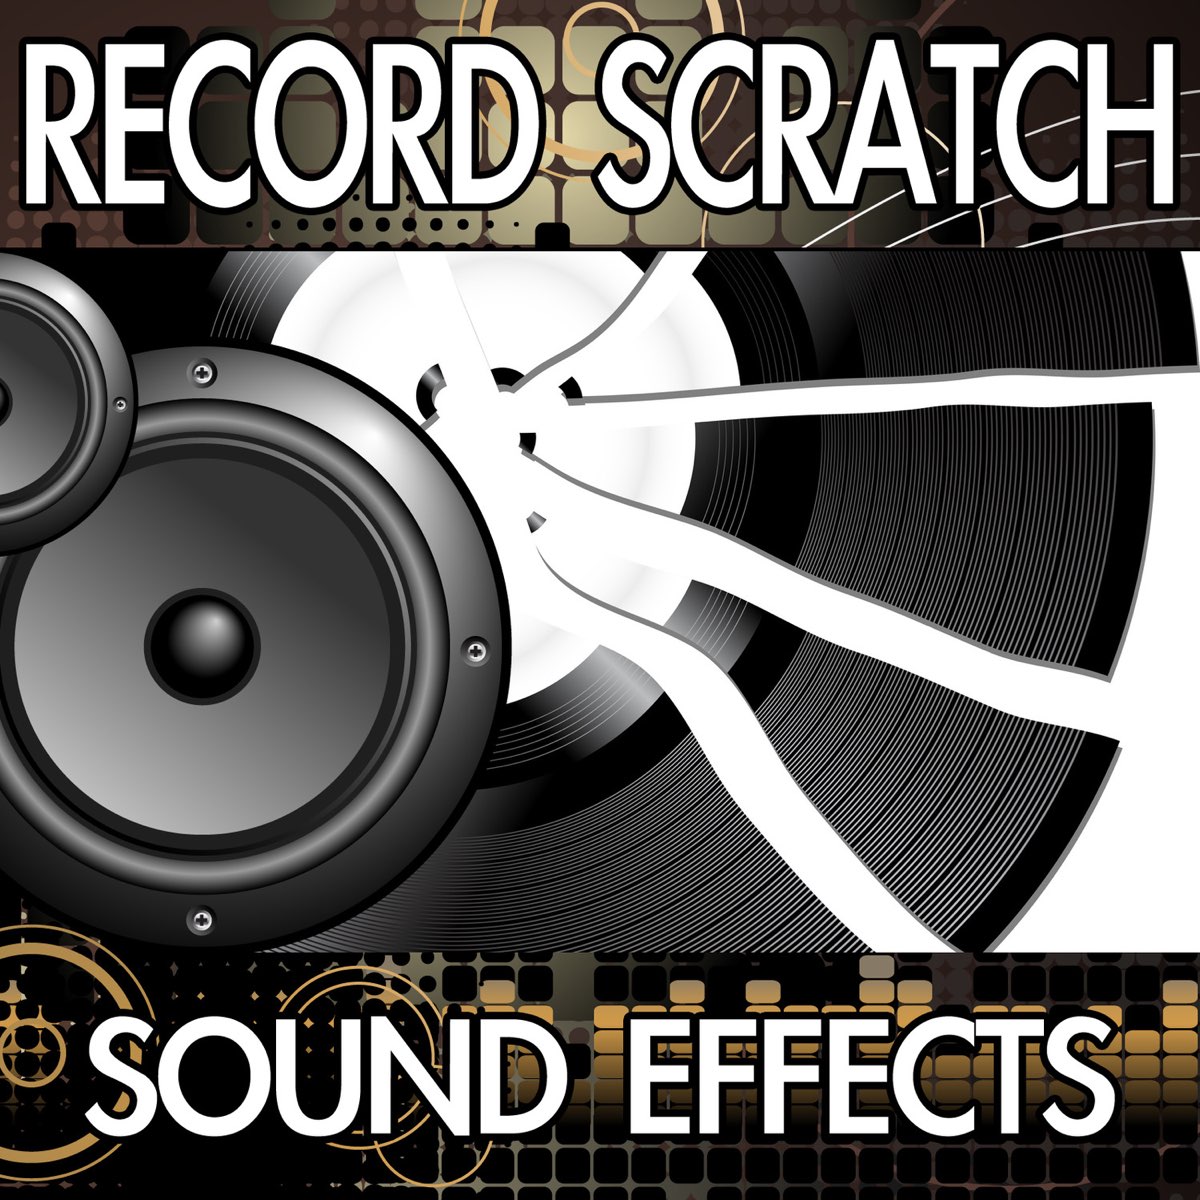 Record Scratch Sound Effects - Album by Finnolia Sound Effects - Apple Music